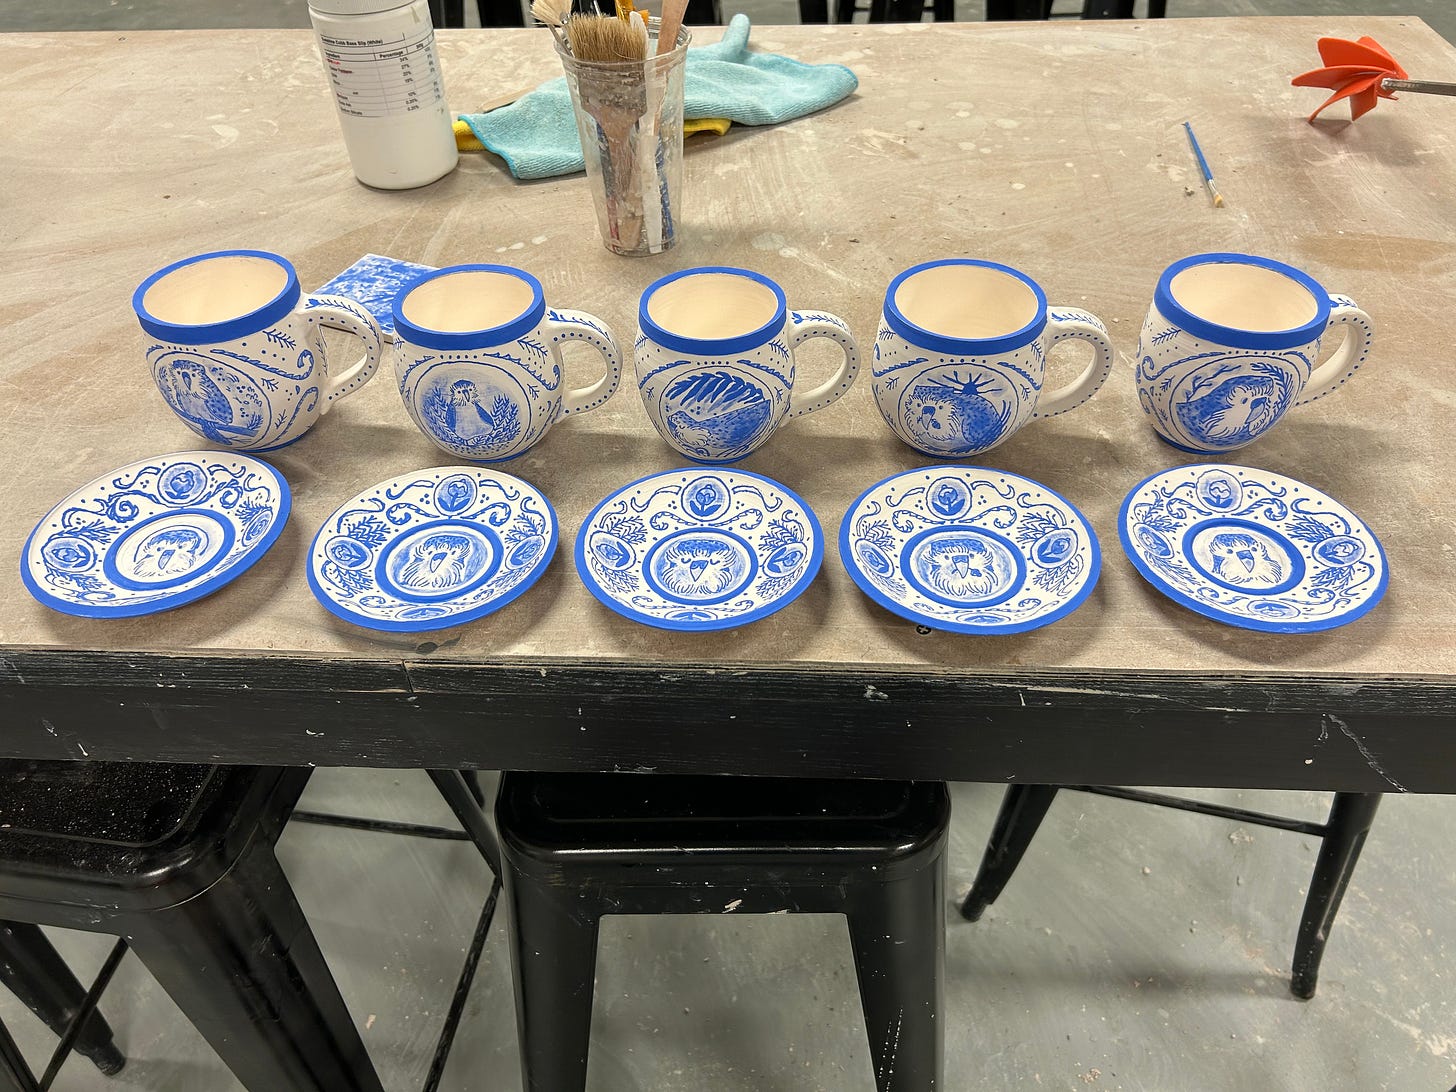 all 5 kakapo mug and saucer sets at the ceramic studio by Kayla Stark and Brad Henderson